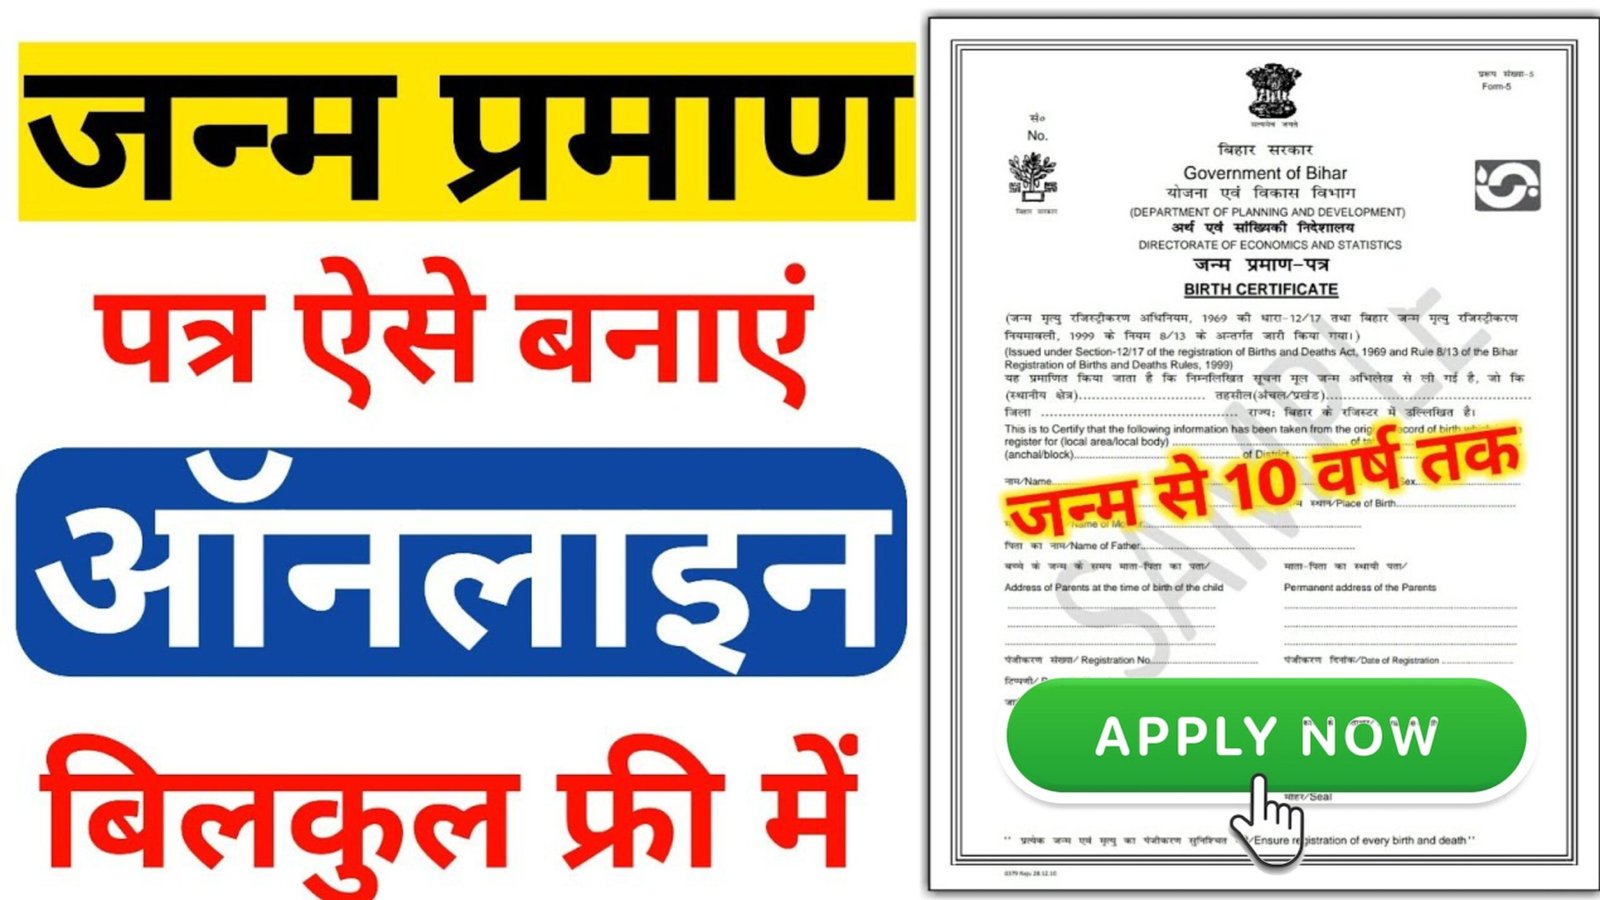 Birth Certificate Online Apply